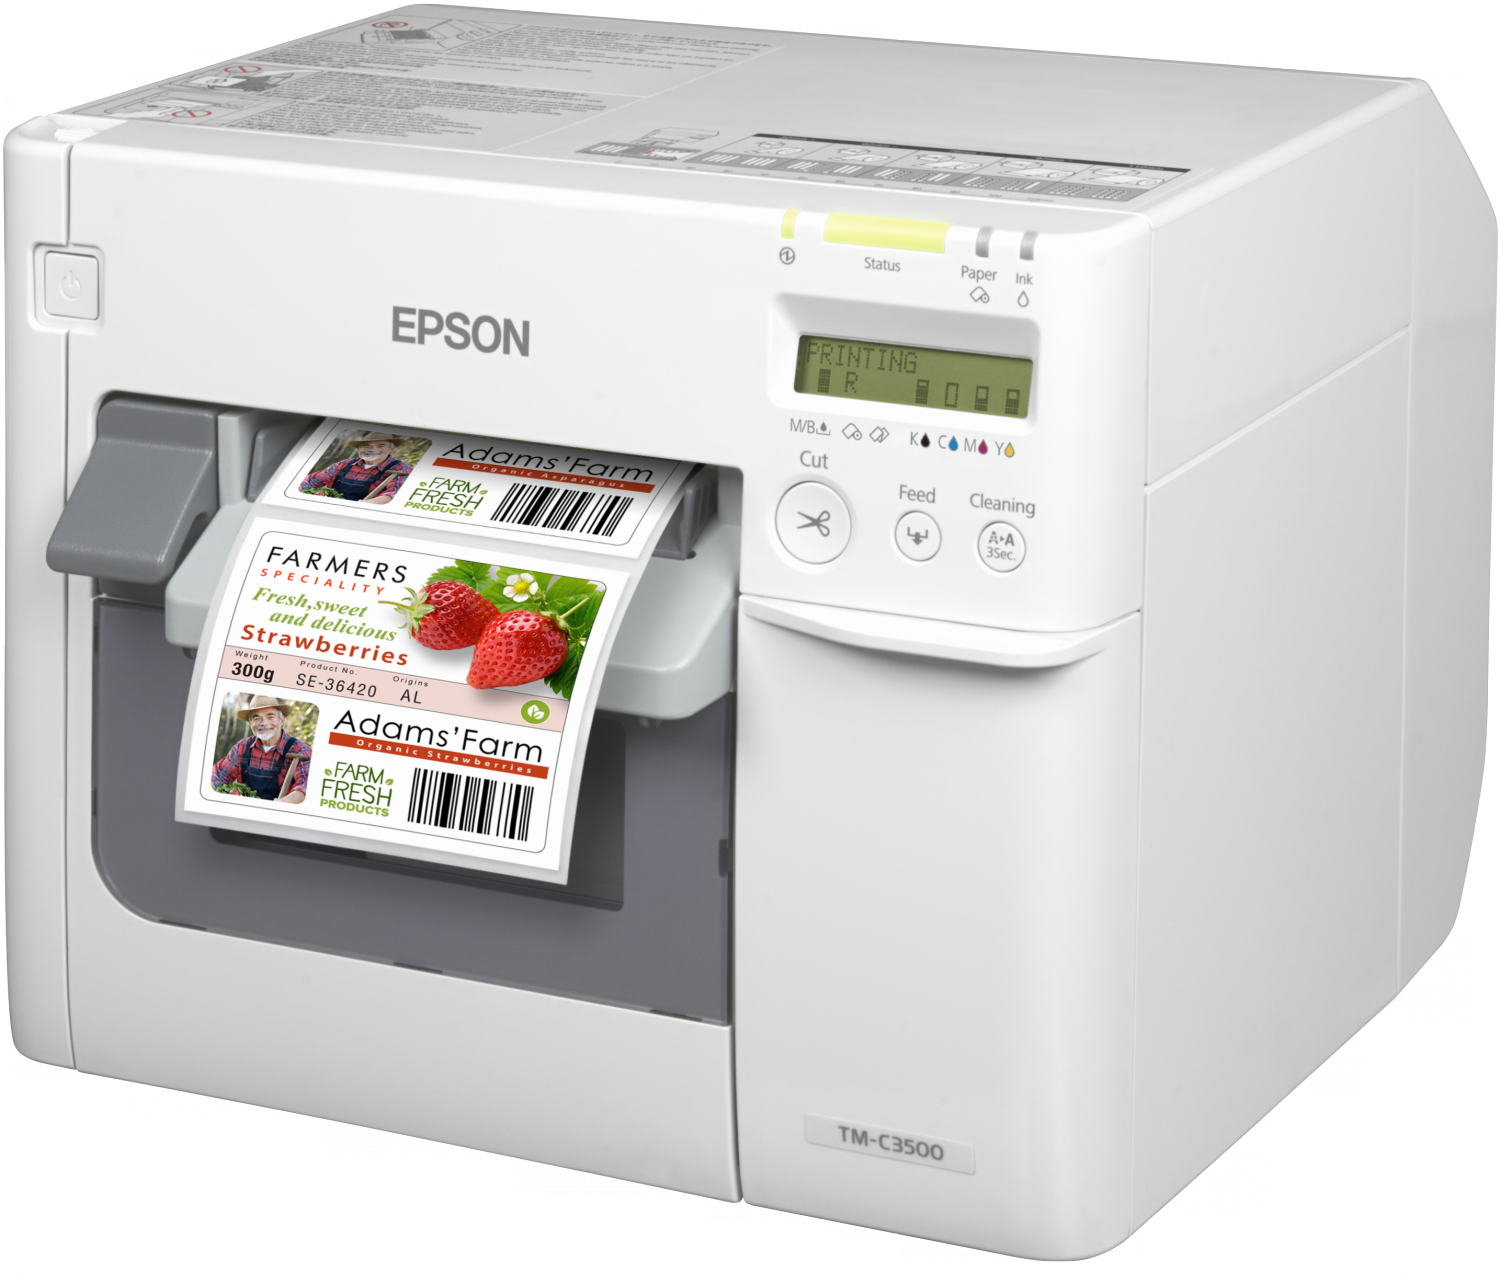 Epson ColorWorks C3500 Series Colour Label Printer